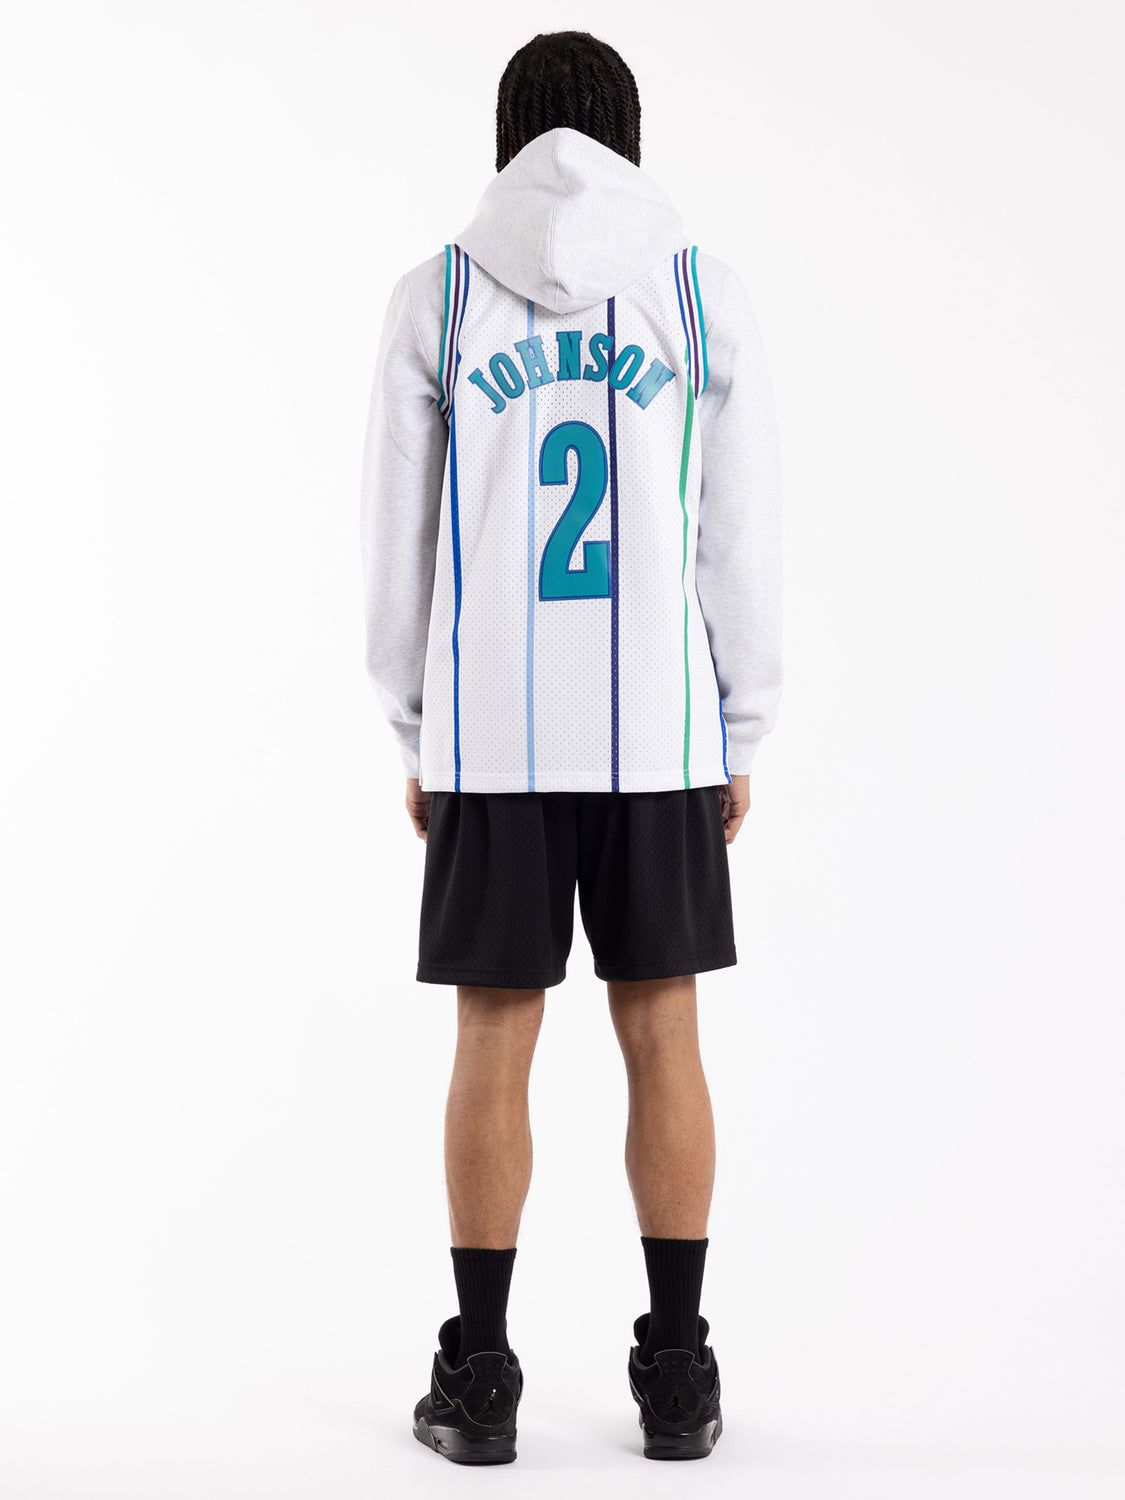 Buy Charlotte Hornets Jerseys & Teamwear, Mitchell & Ness